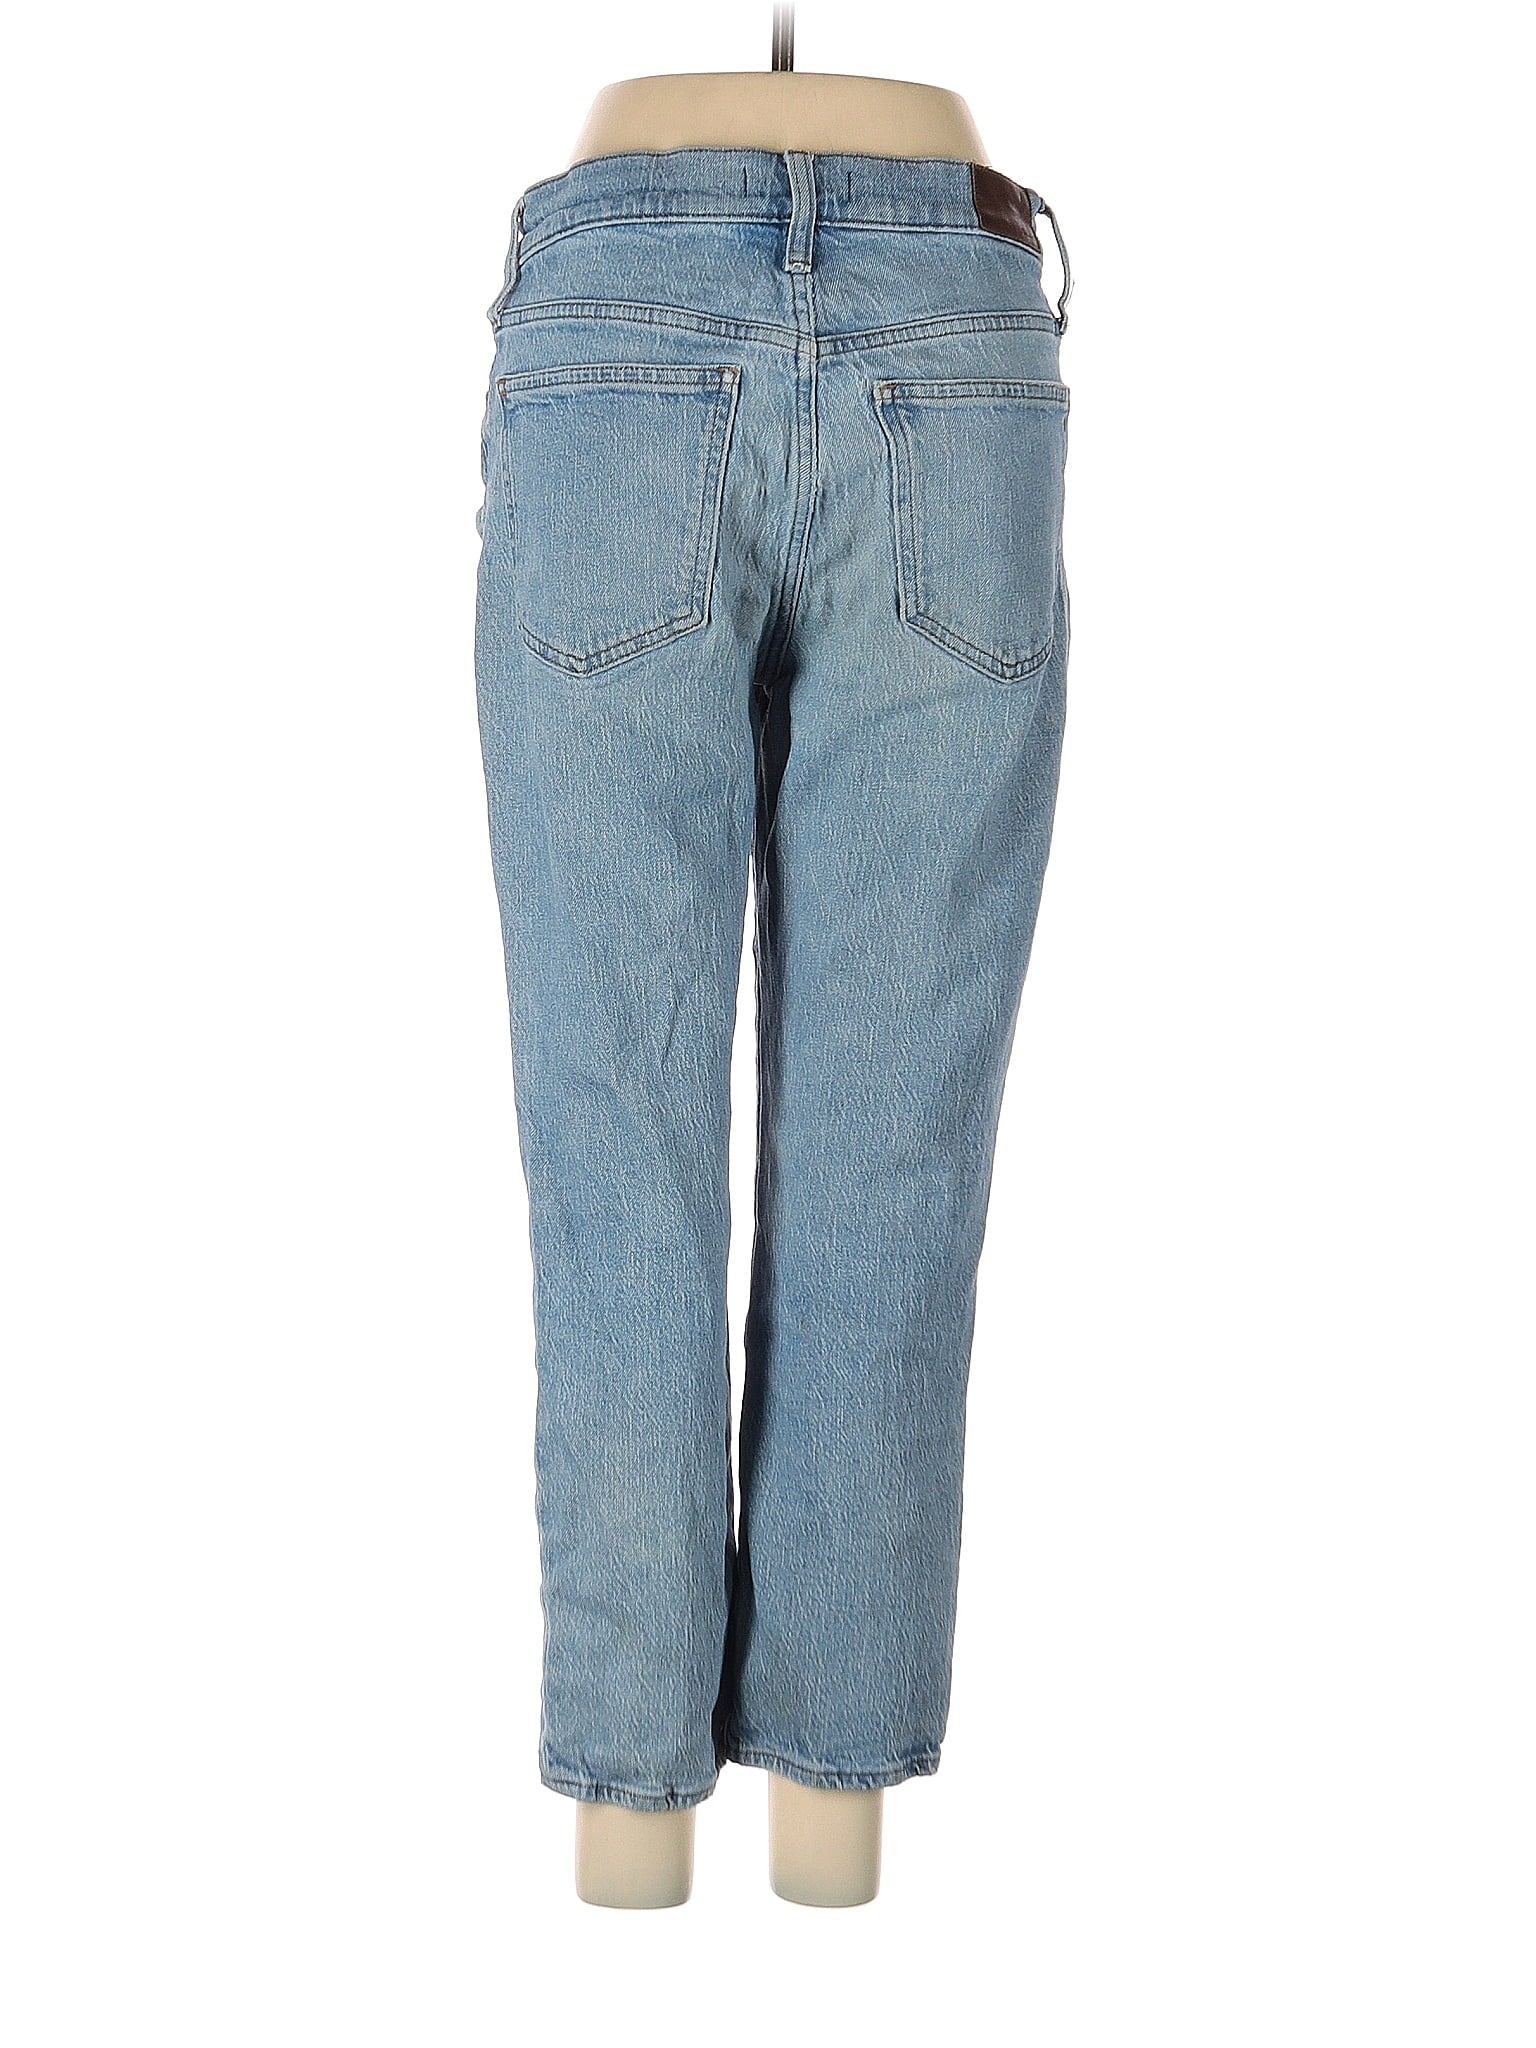 Mid-Rise Jeans waist size - 29